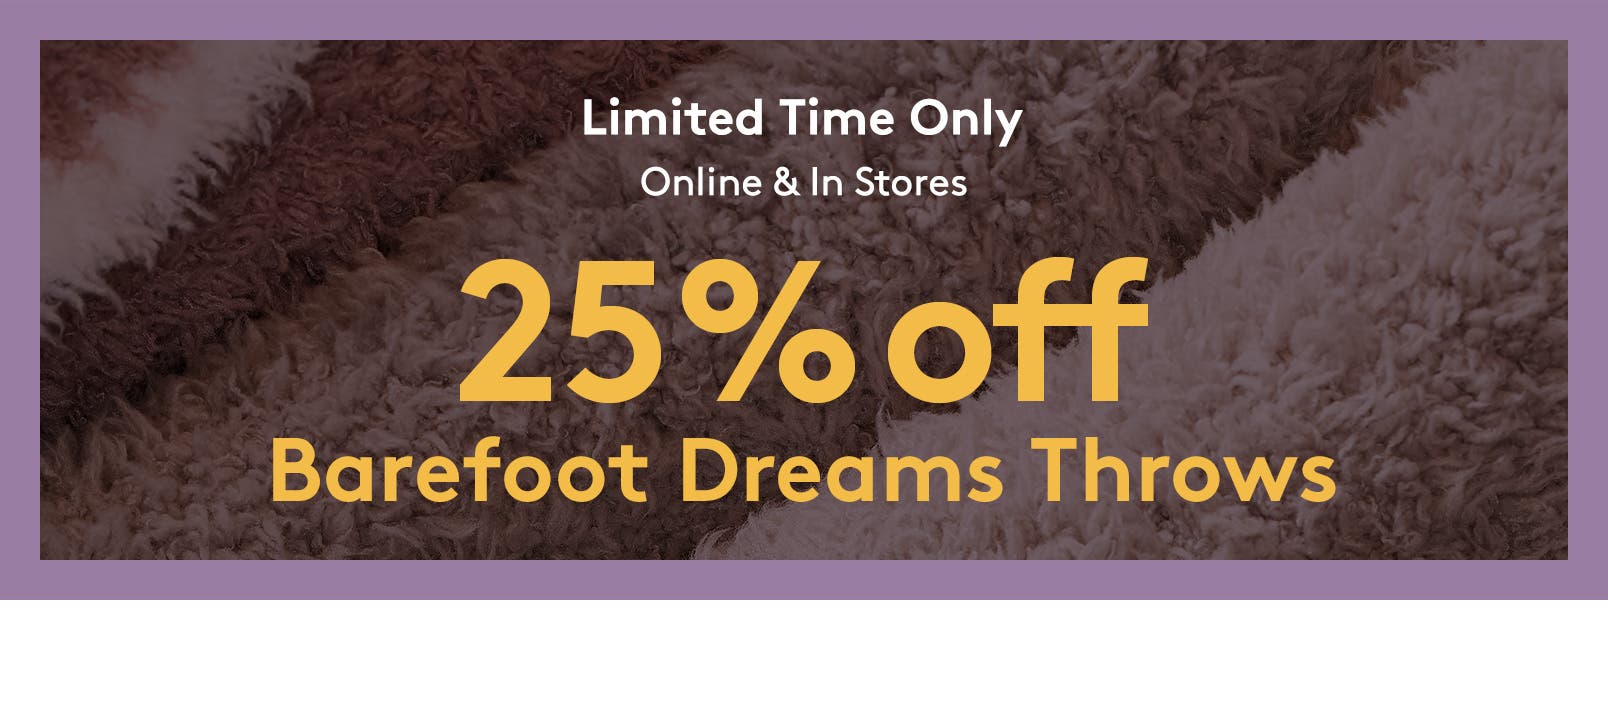 Twenty-five percent off Barefoot Dreams throws.